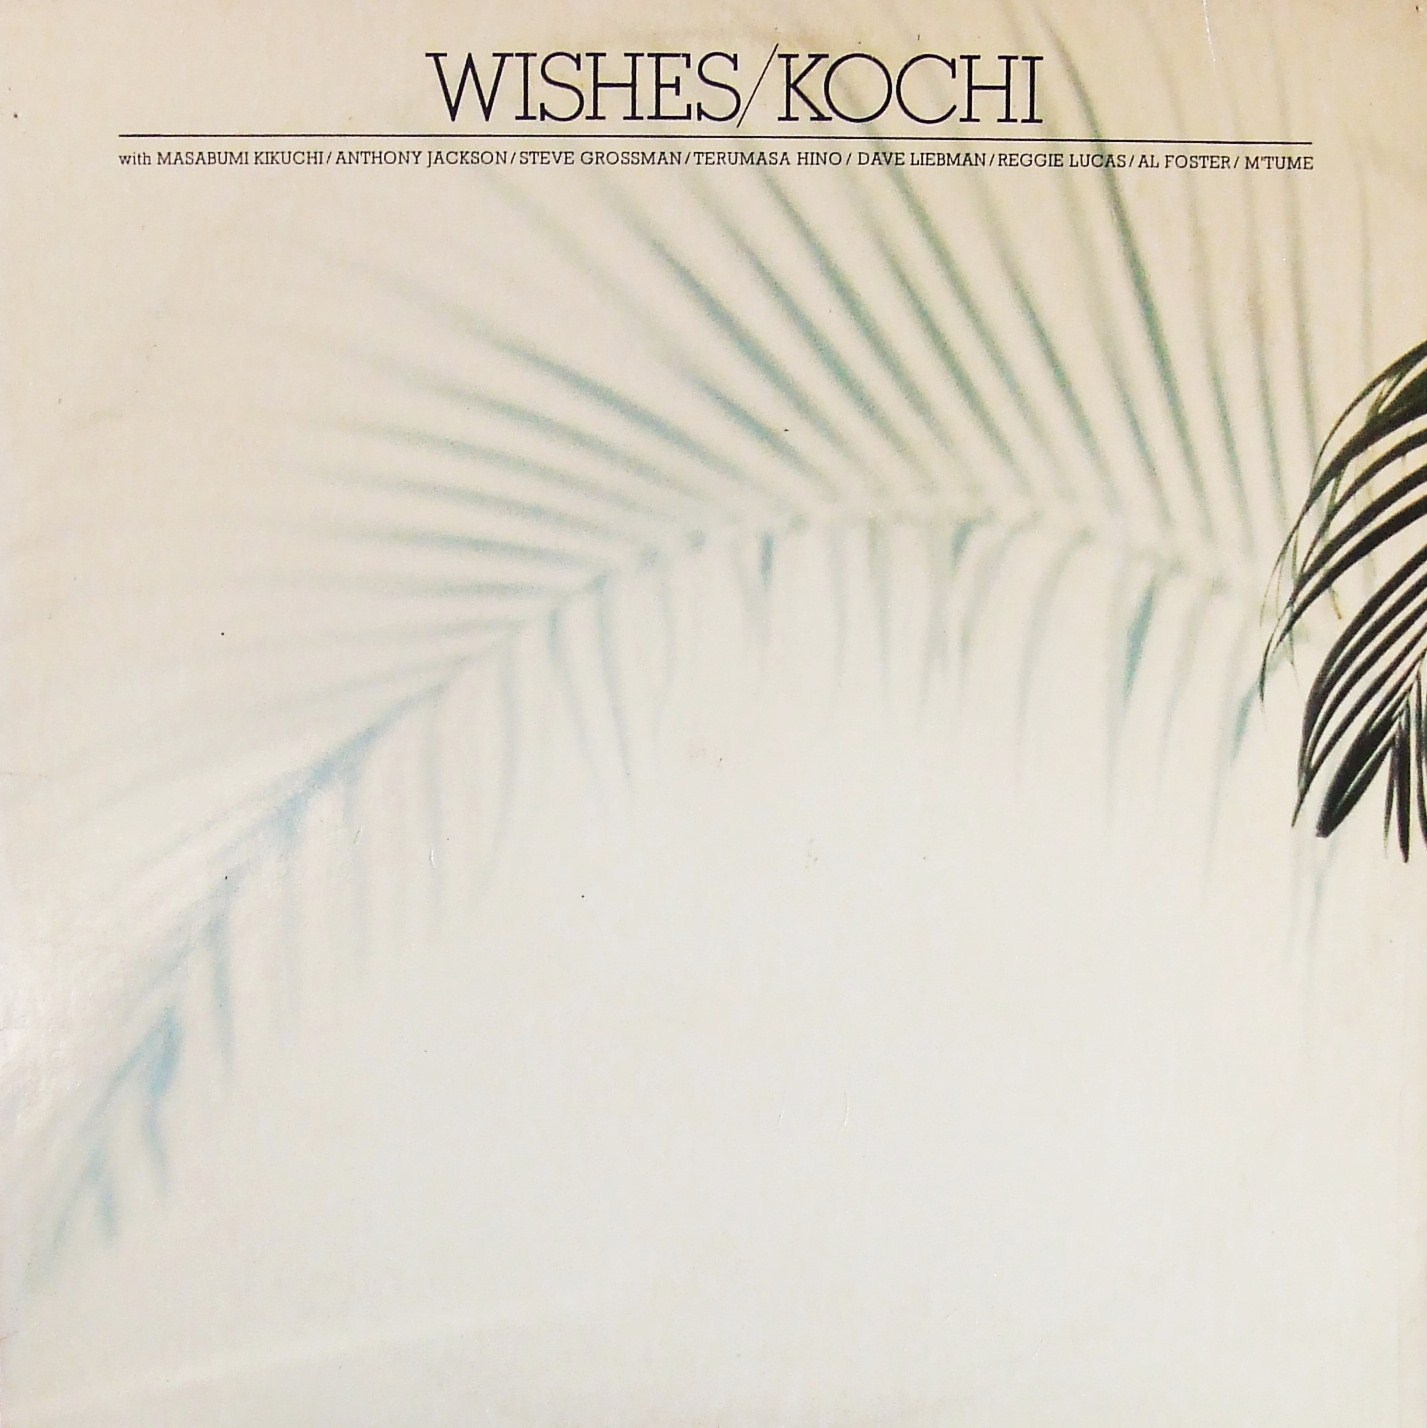 MASABUMI KIKUCHI - Wishes/Kochi cover 